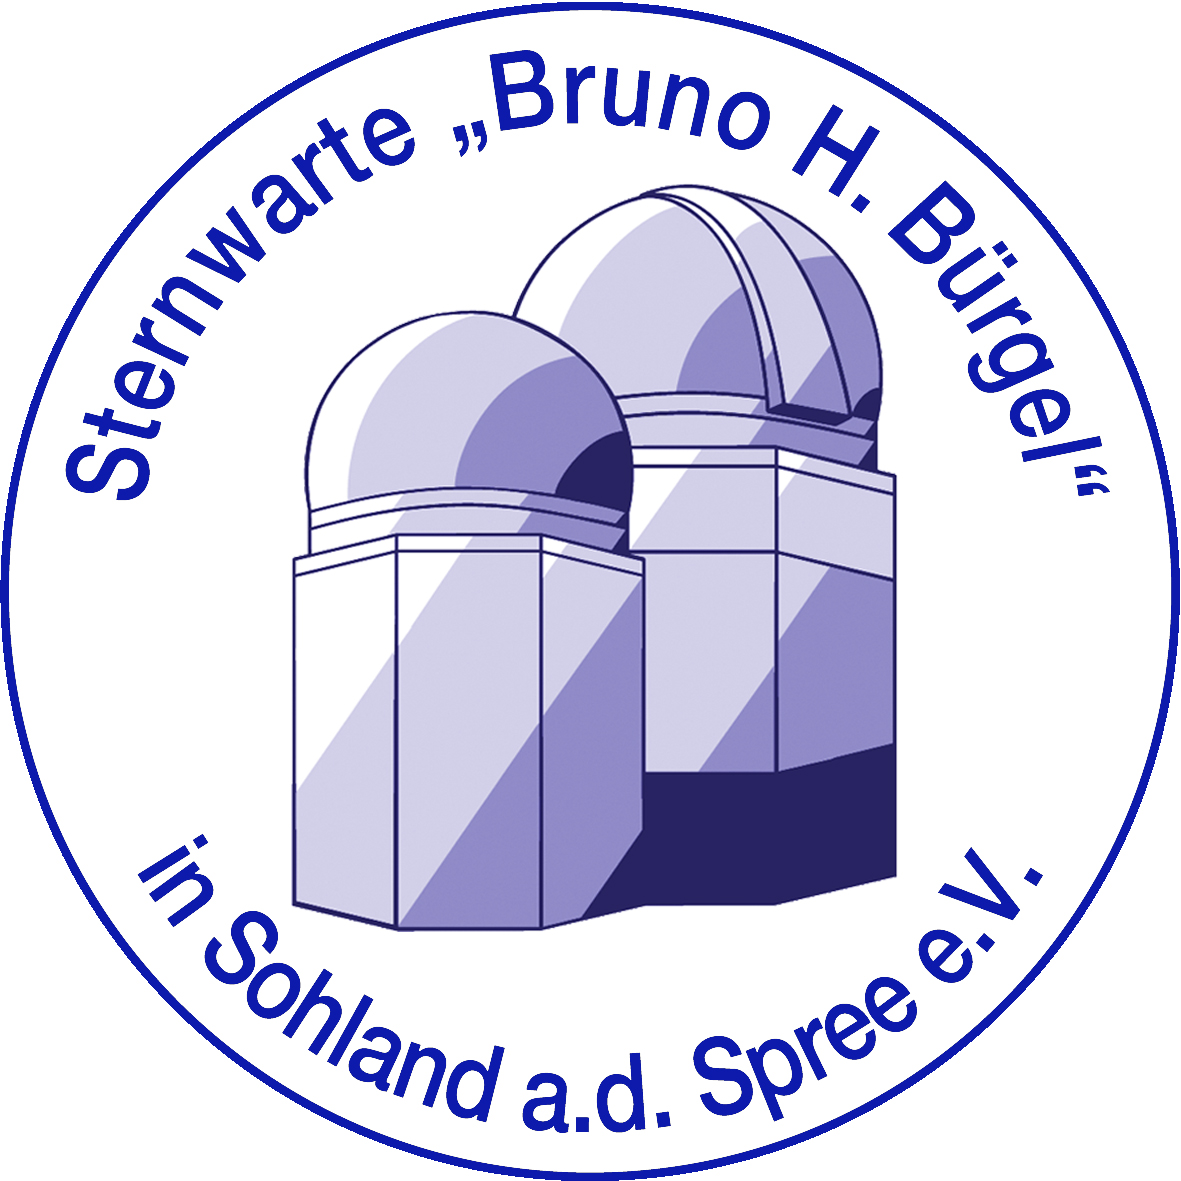 Sternwarte „Bruno H. Bürgel“ in Sohland a.d. Spree e.V.